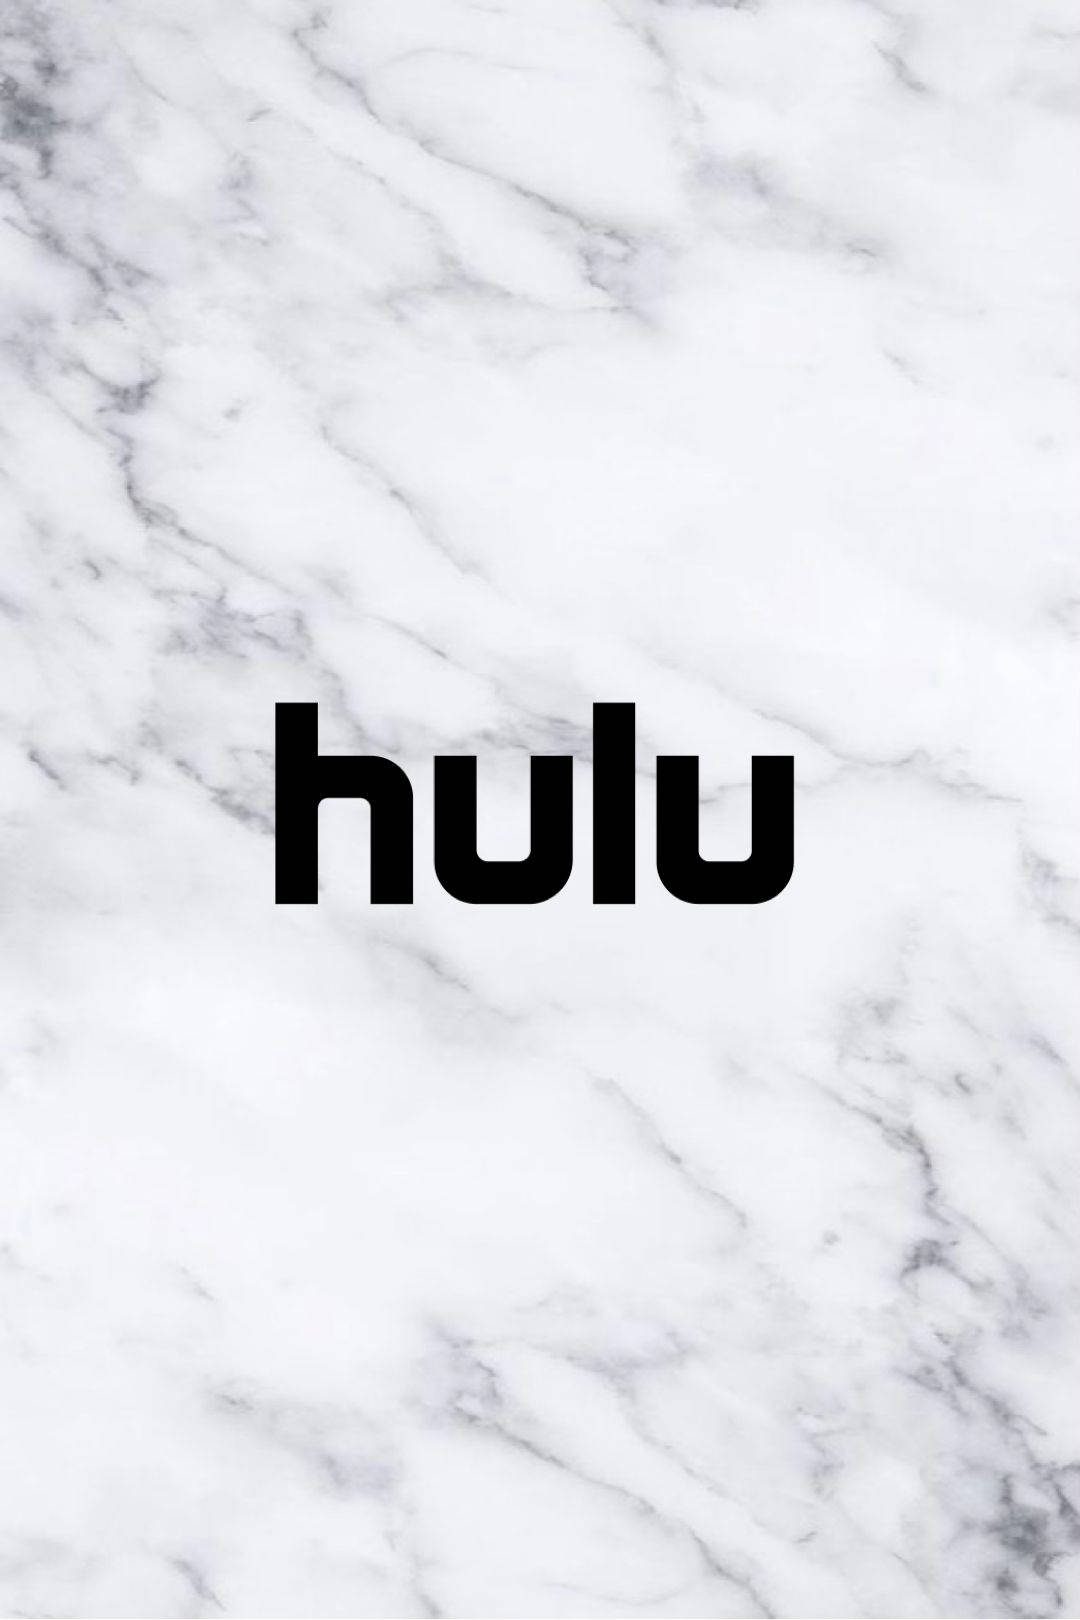 Hulu In Marble Background